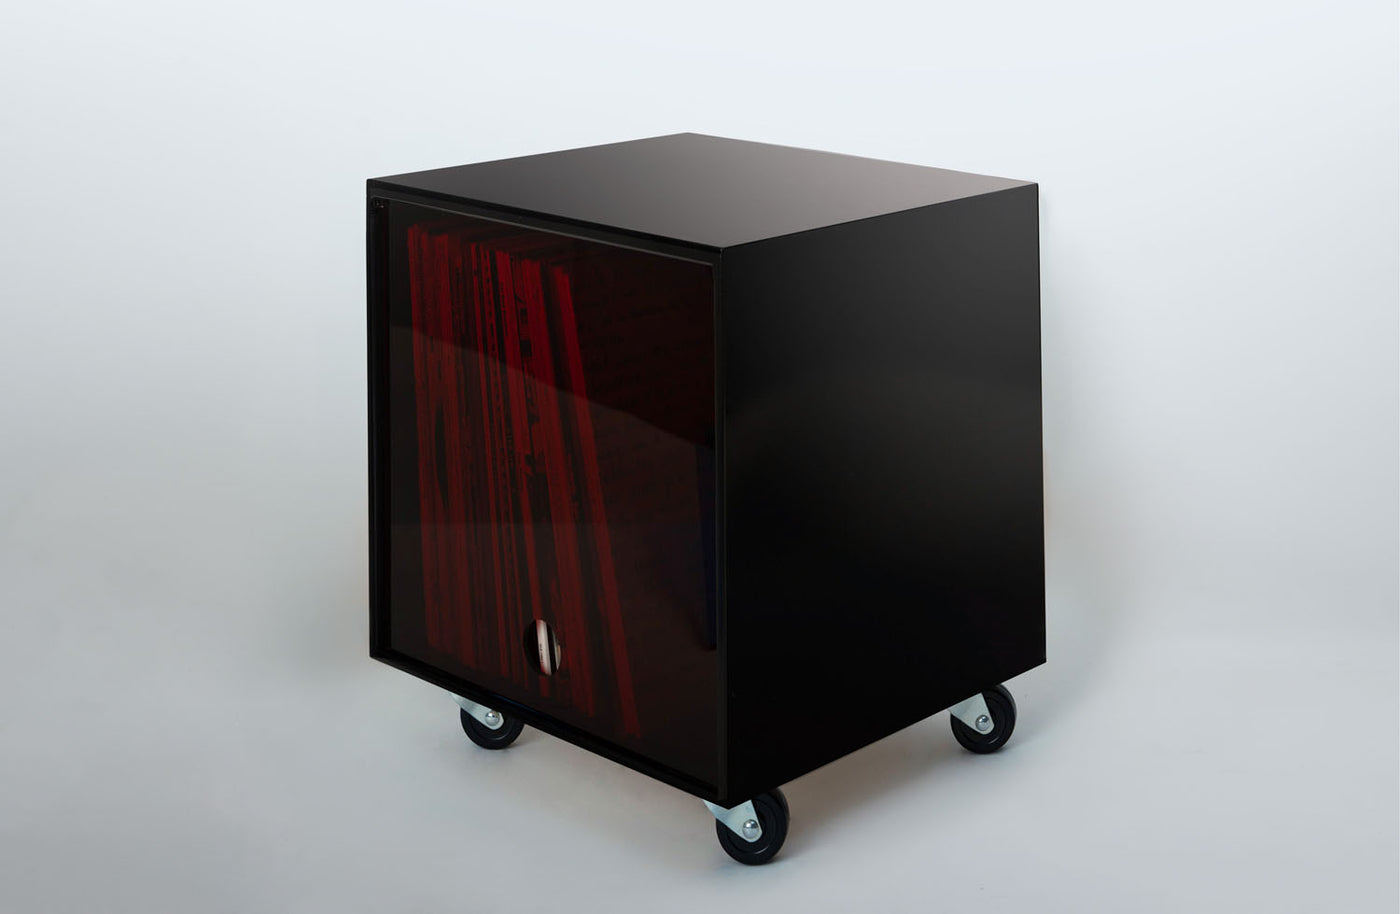 Storage Cube - Black